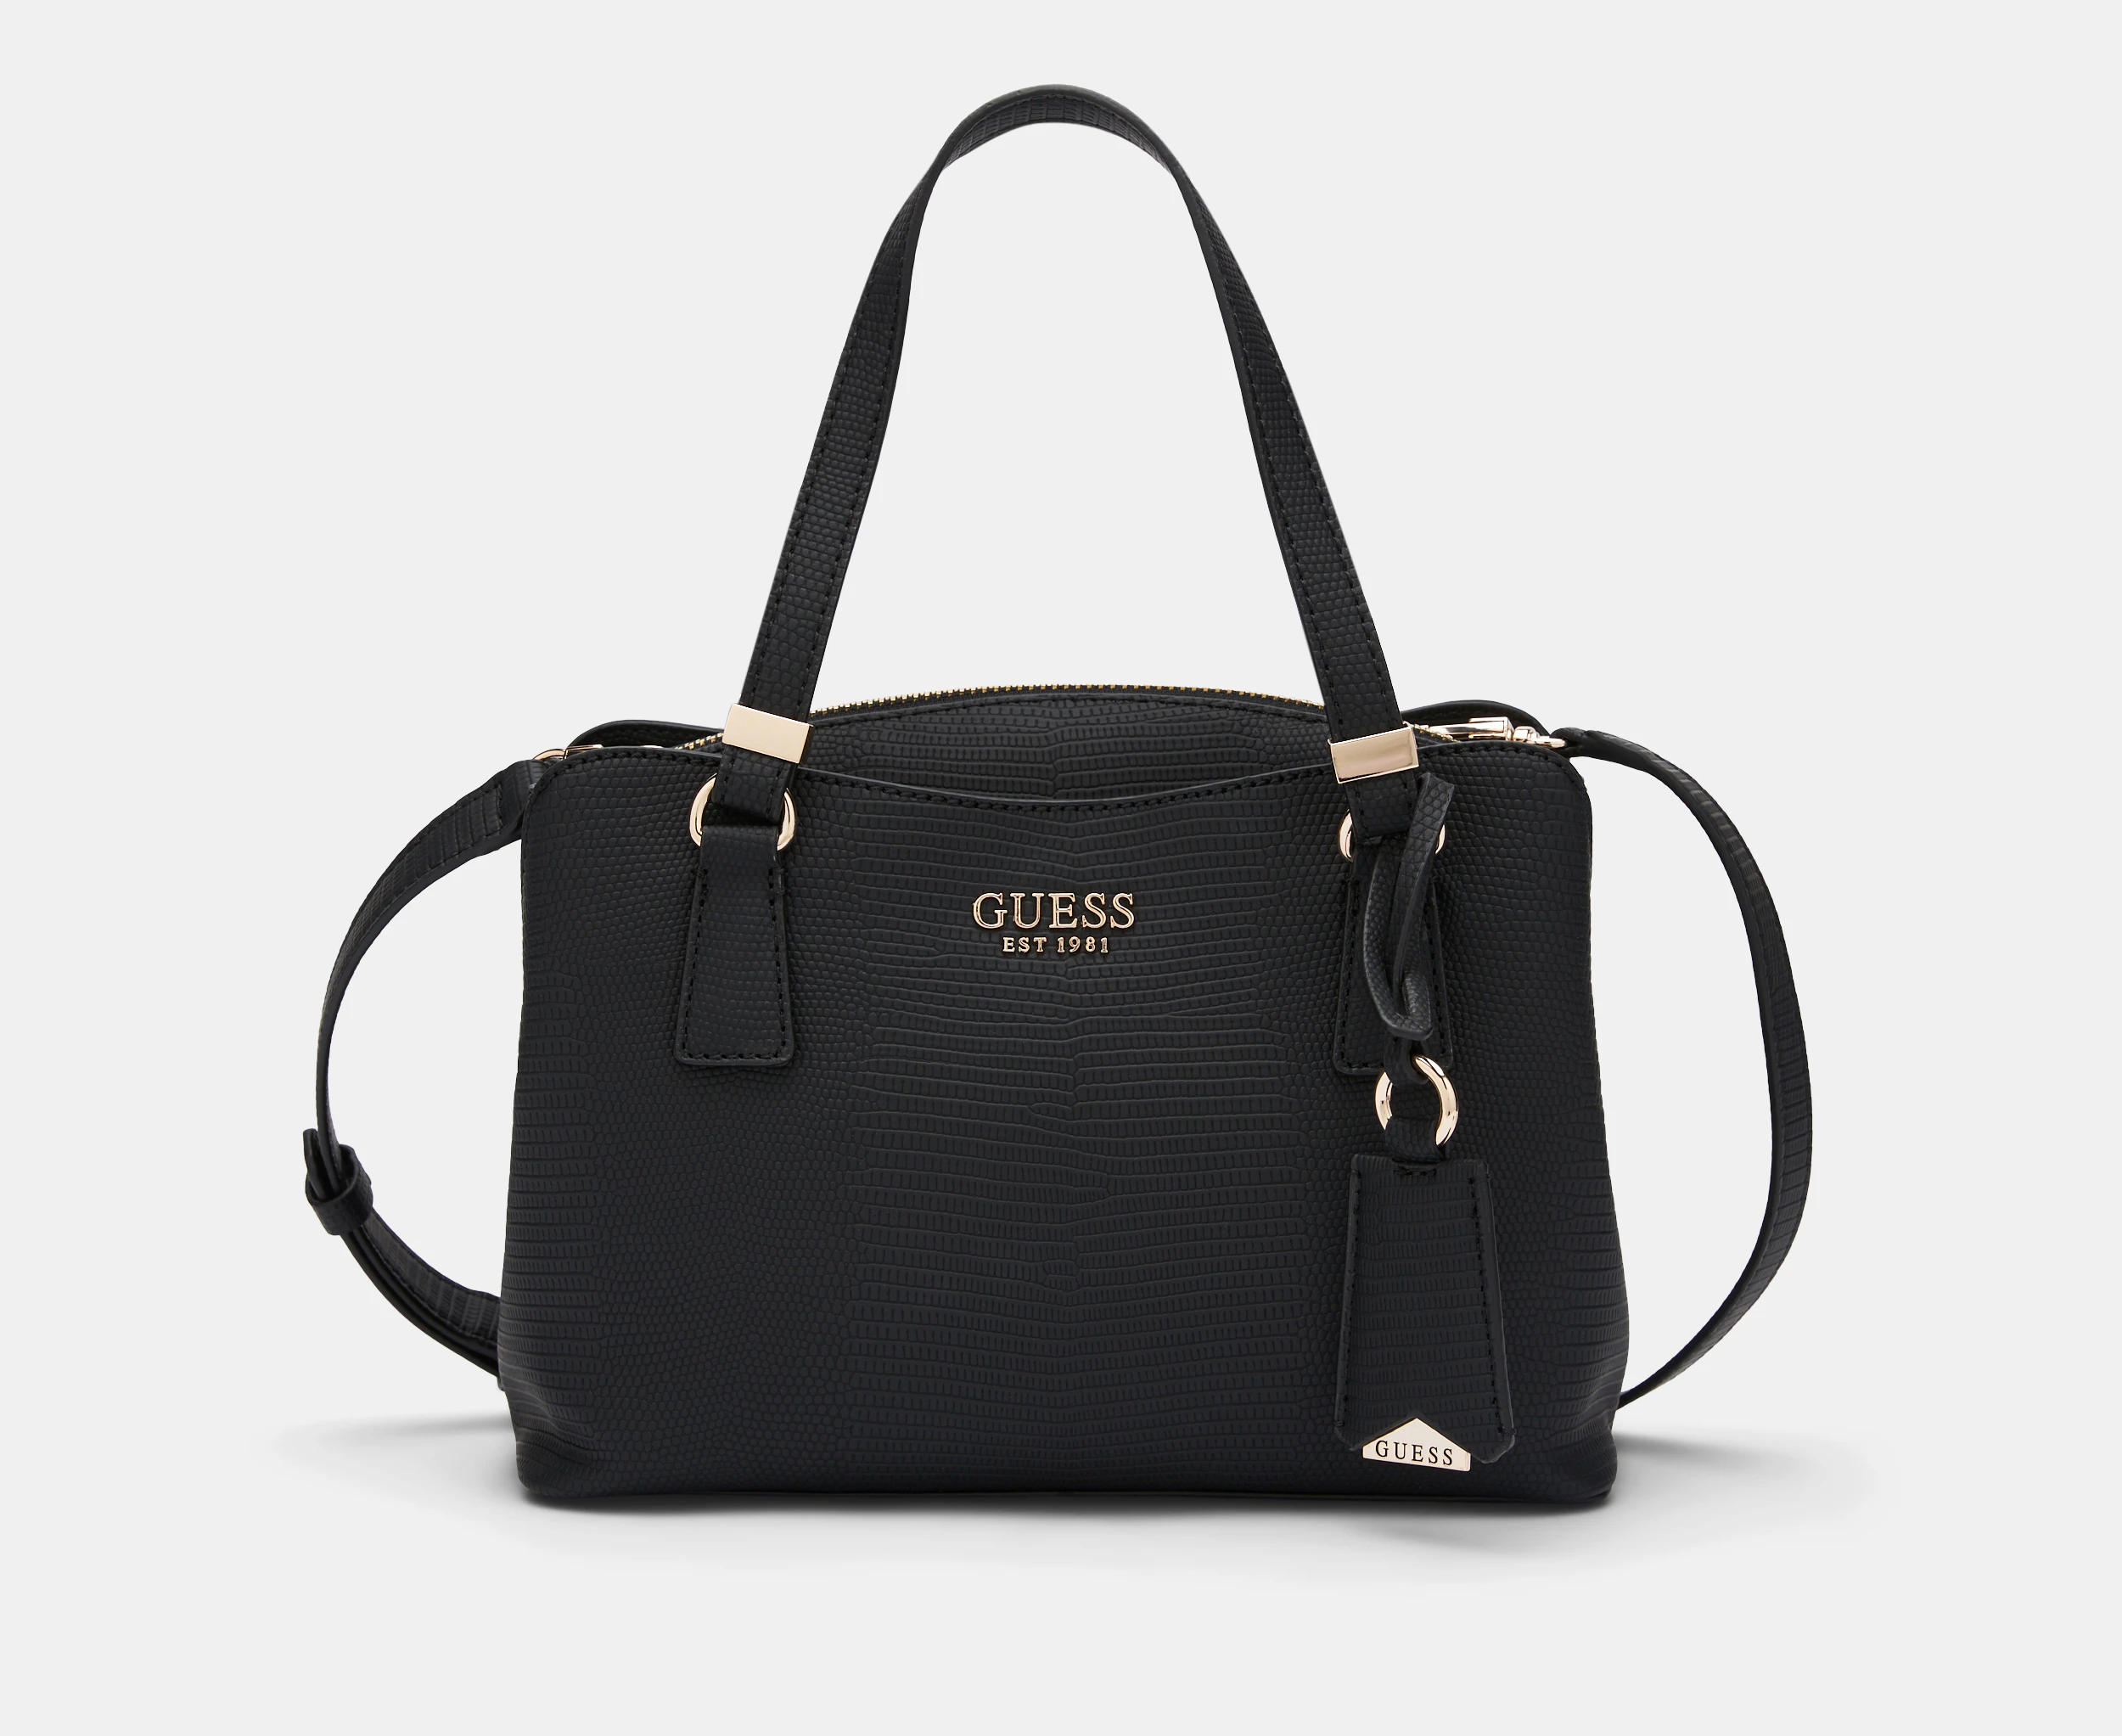 Black Guess Purse / Handbag - Gem